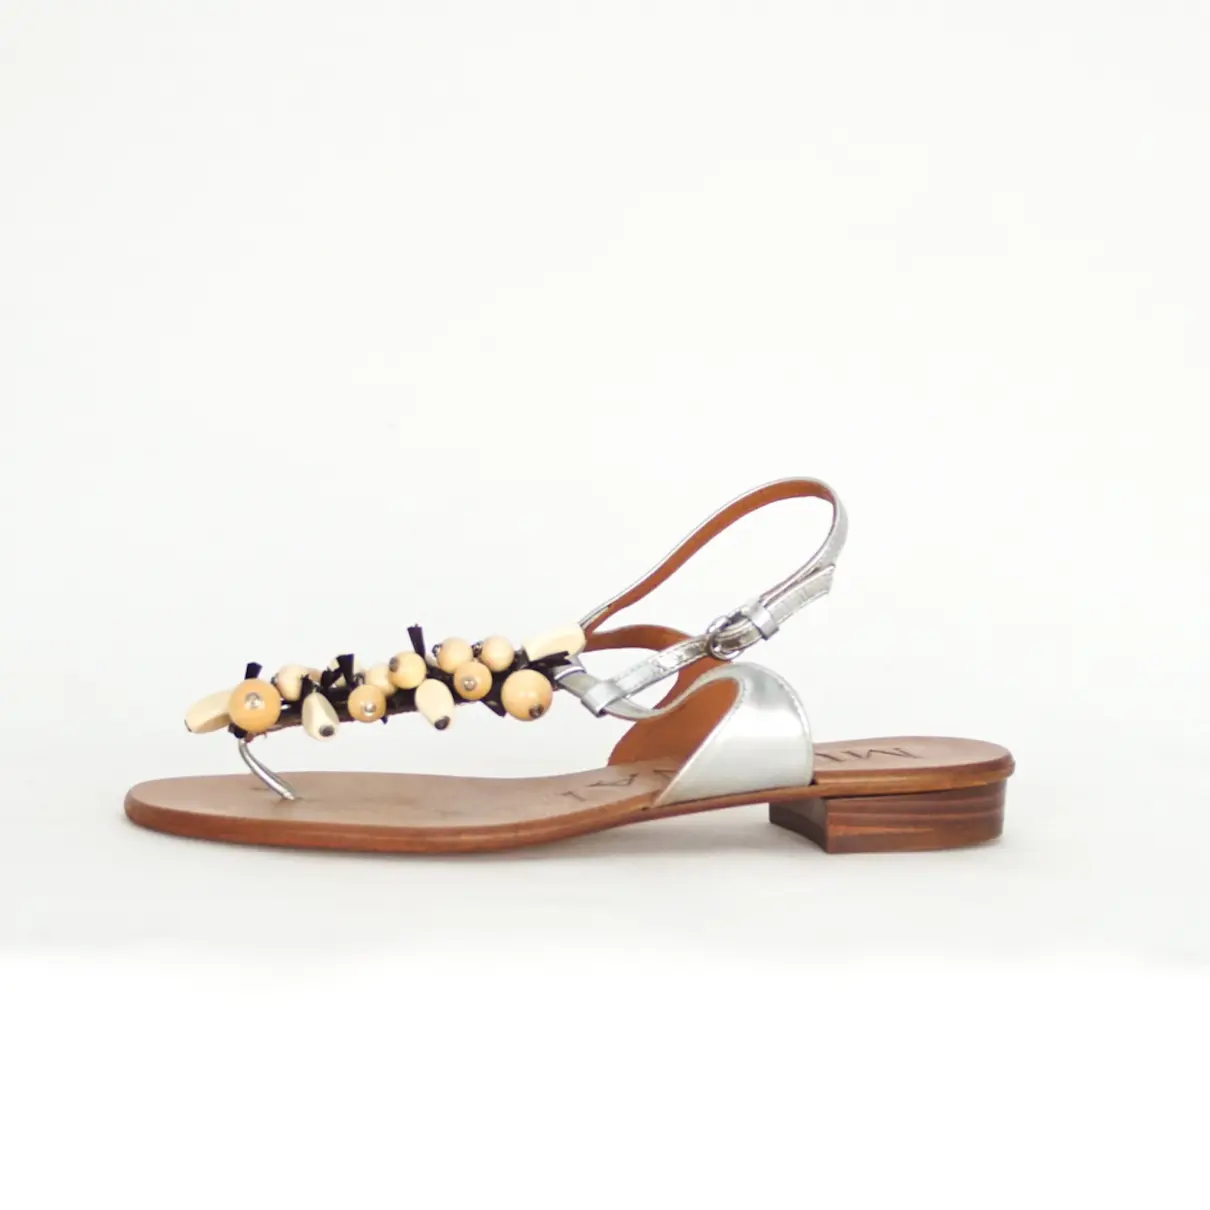 Buy Mugnai Leather sandal online